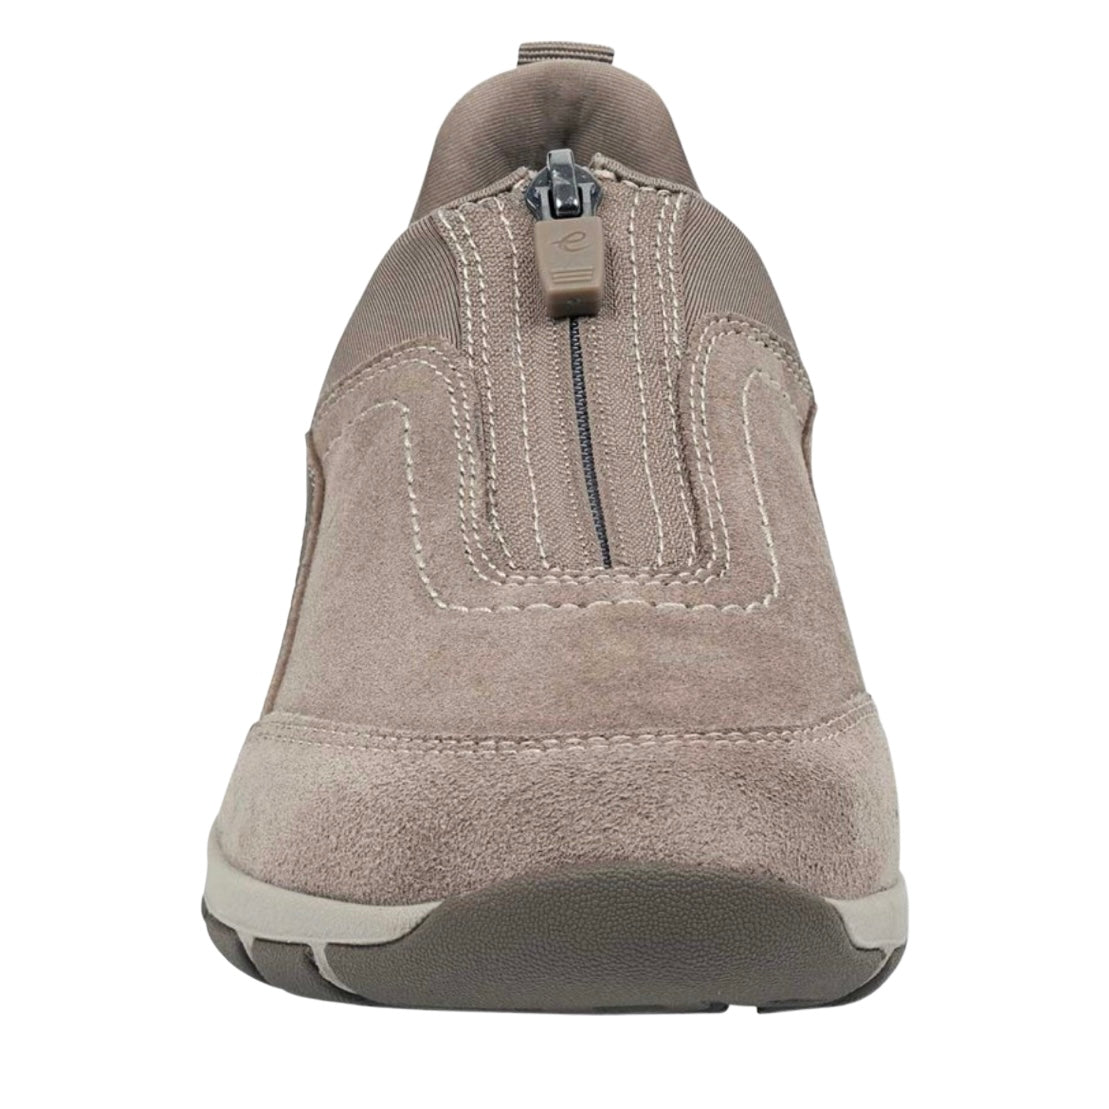 CAVE Taupe Comfort Zip Up Low Top Slip On Round Toe Women's Sneakers